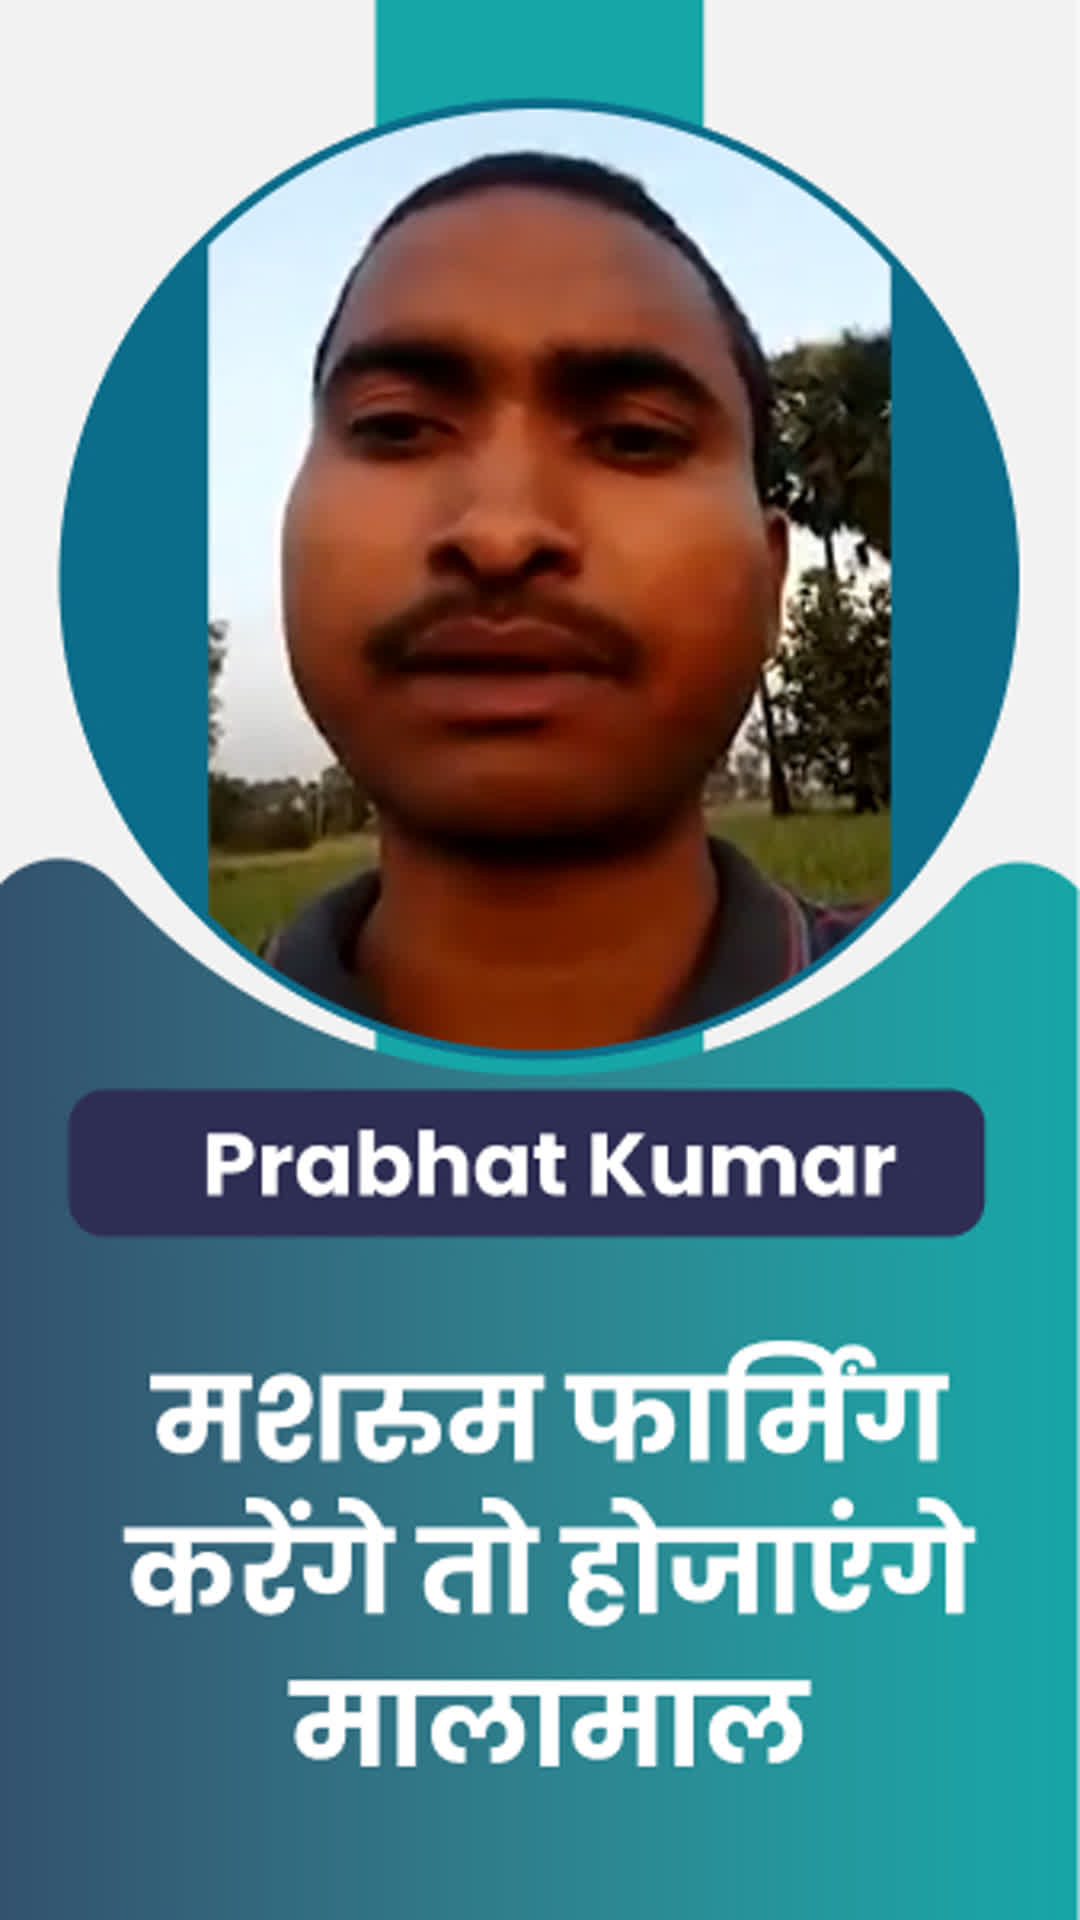 Prabhat Kumar's Honest Review of ffreedom app - Nalanda ,Bihar